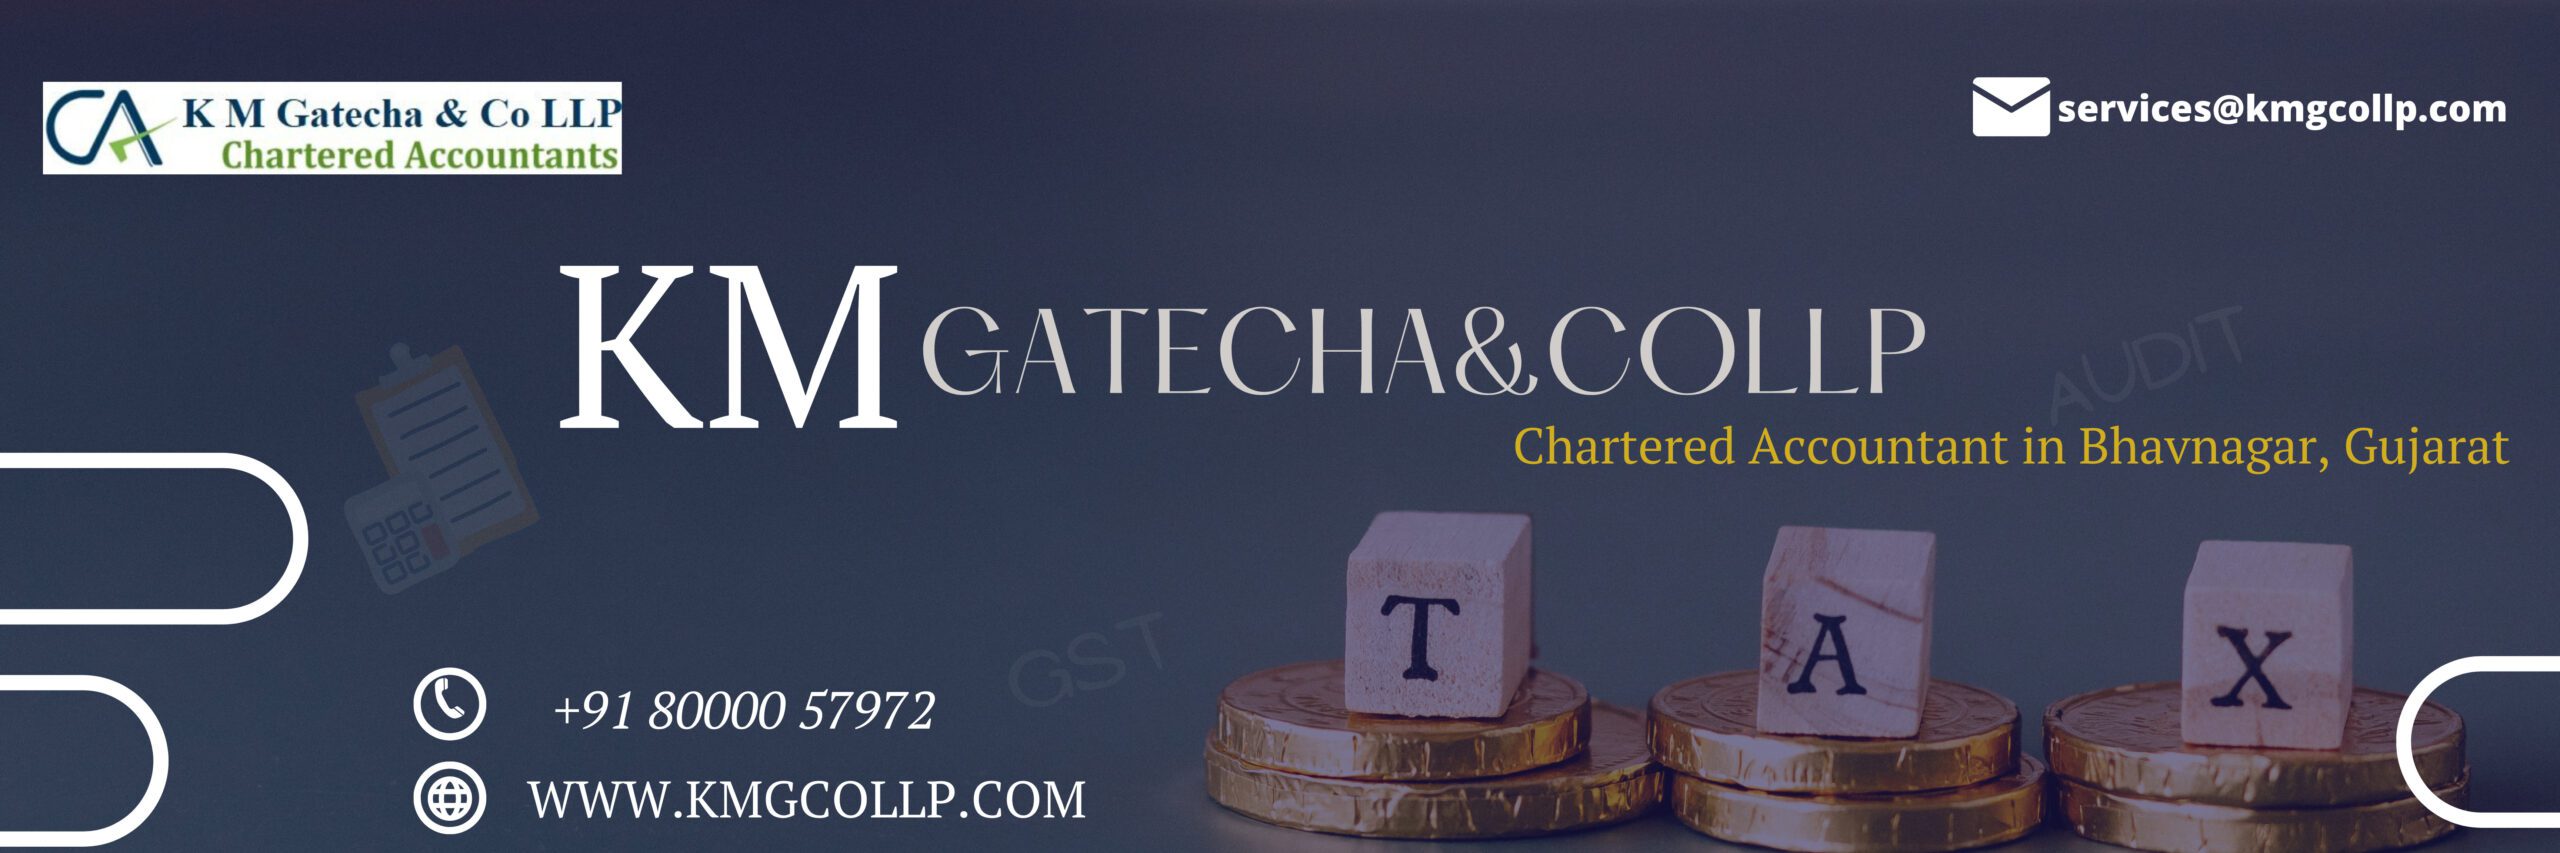 CA Chartered Accountant in Bhavnagar, Gujarat